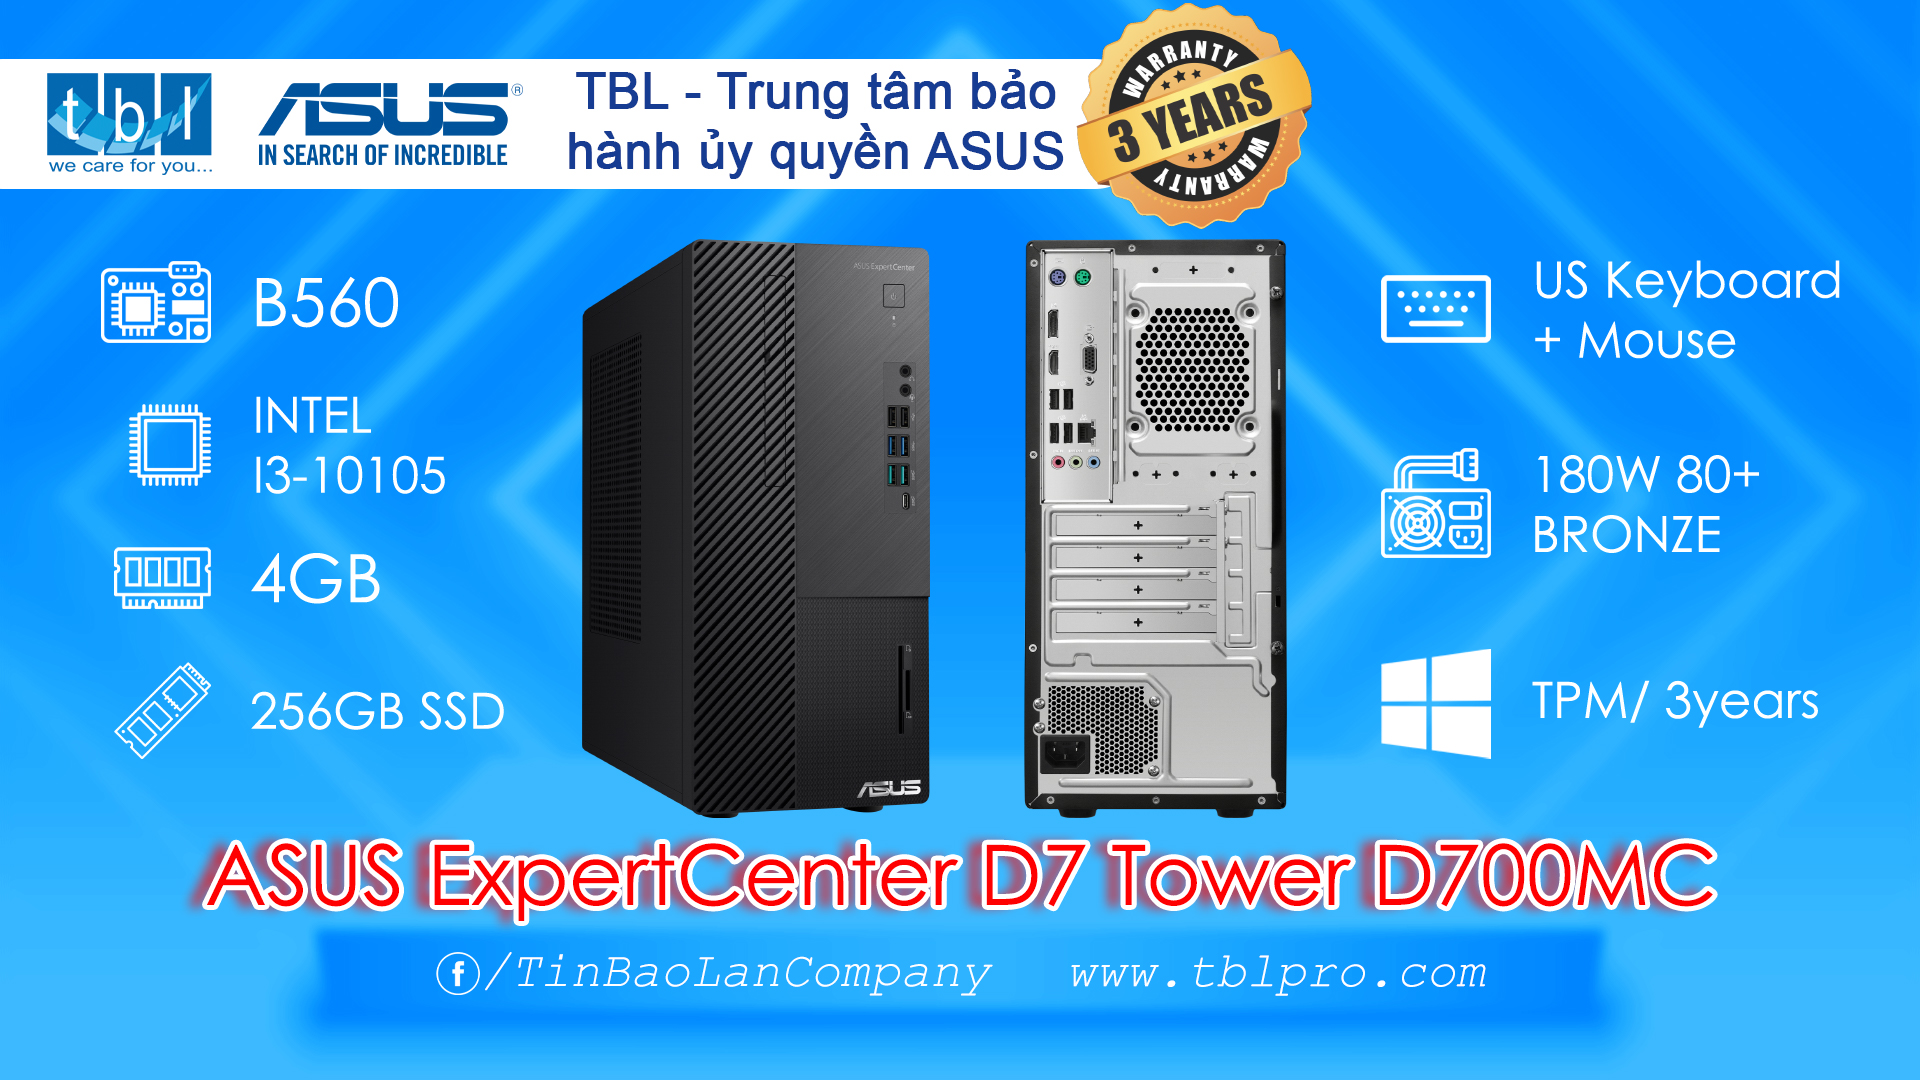 ASUS ExpertCenter D7 Tower D700 MC